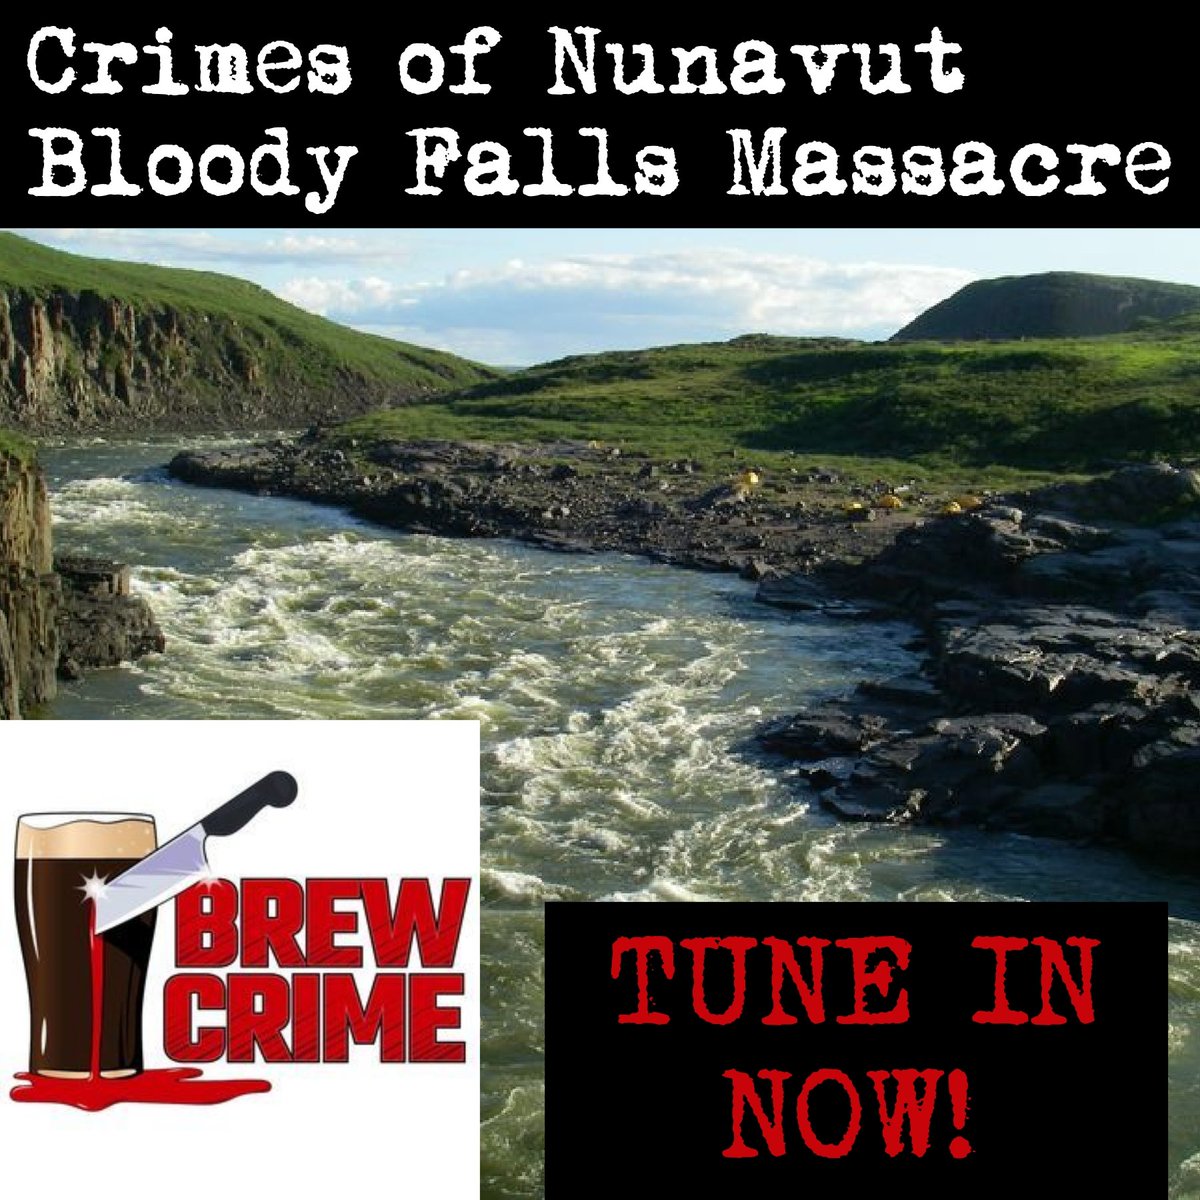 Brew Crime returns
Crimes of Nunavut
Bloody Falls Maasacre 

Tune in now!

linktr.ee/brewcrime

Promo @ALilWickedPod 

#historicalcrime #BrewCrimePodcast #BrewCrime #CanadianCrime #Nunavut #NorthernCanada #BloodyFallsMassacre